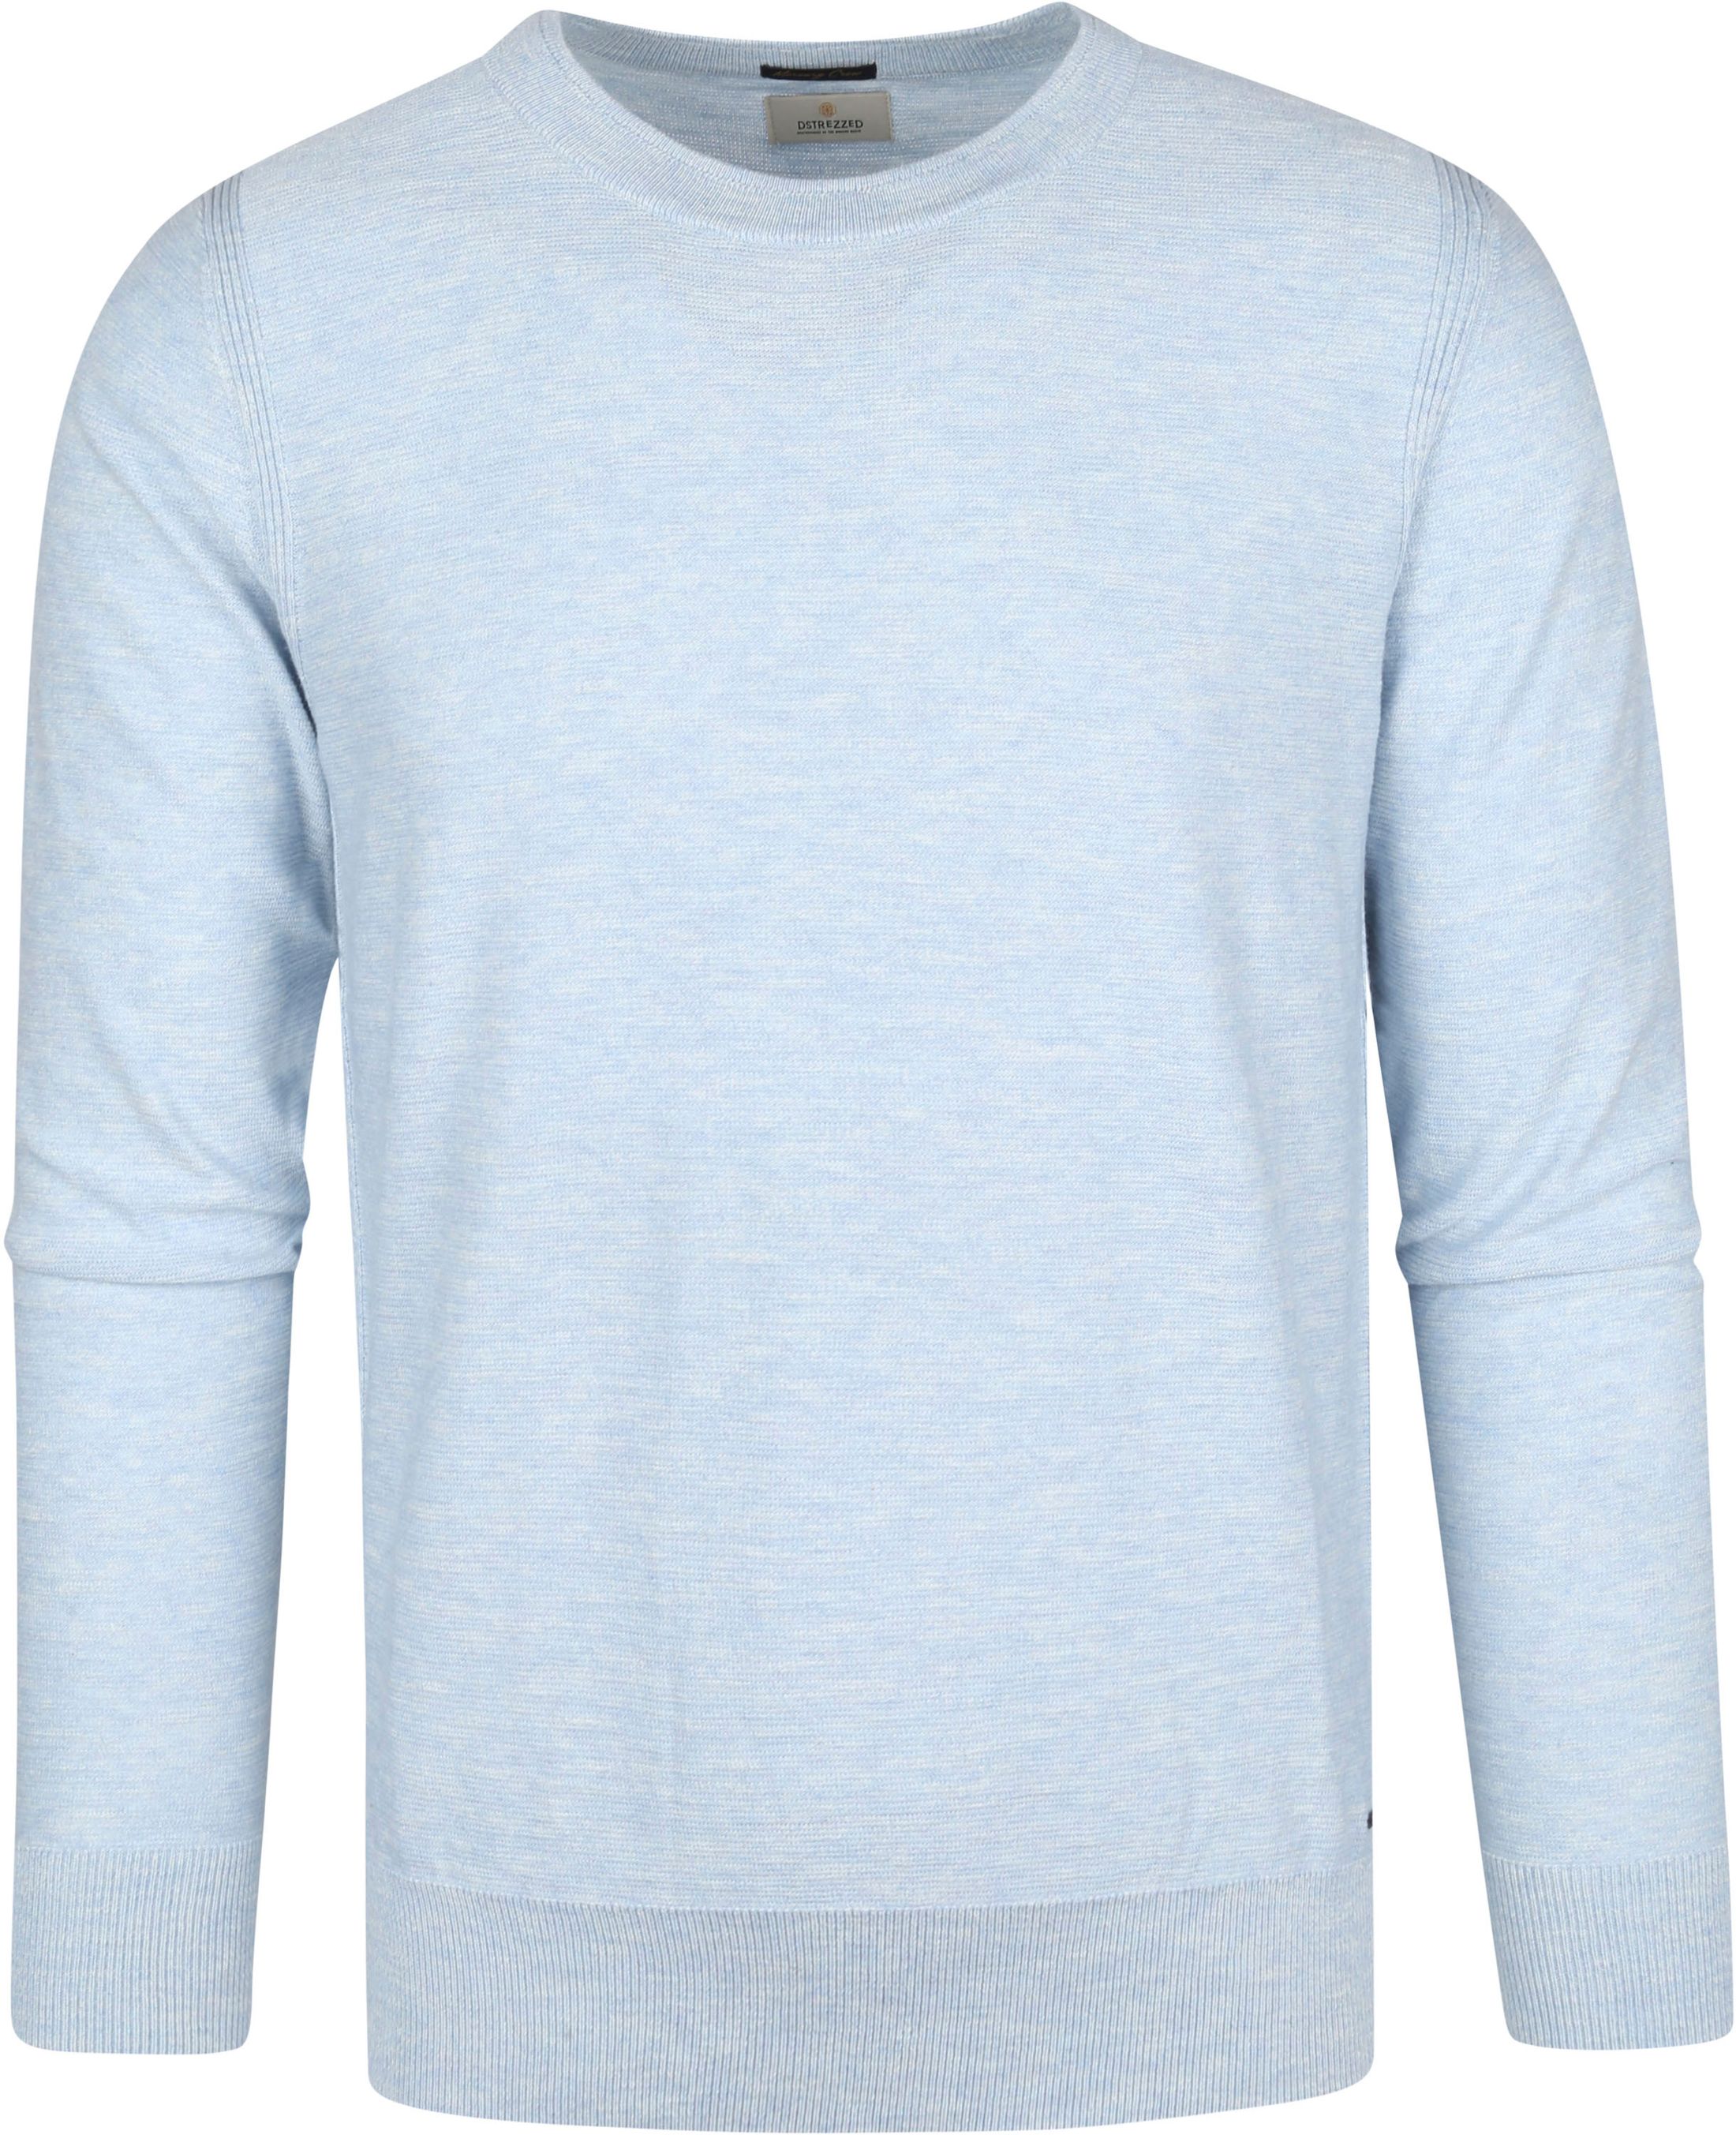 Dstrezzed Mercury Crew Sweater Light Blue size L